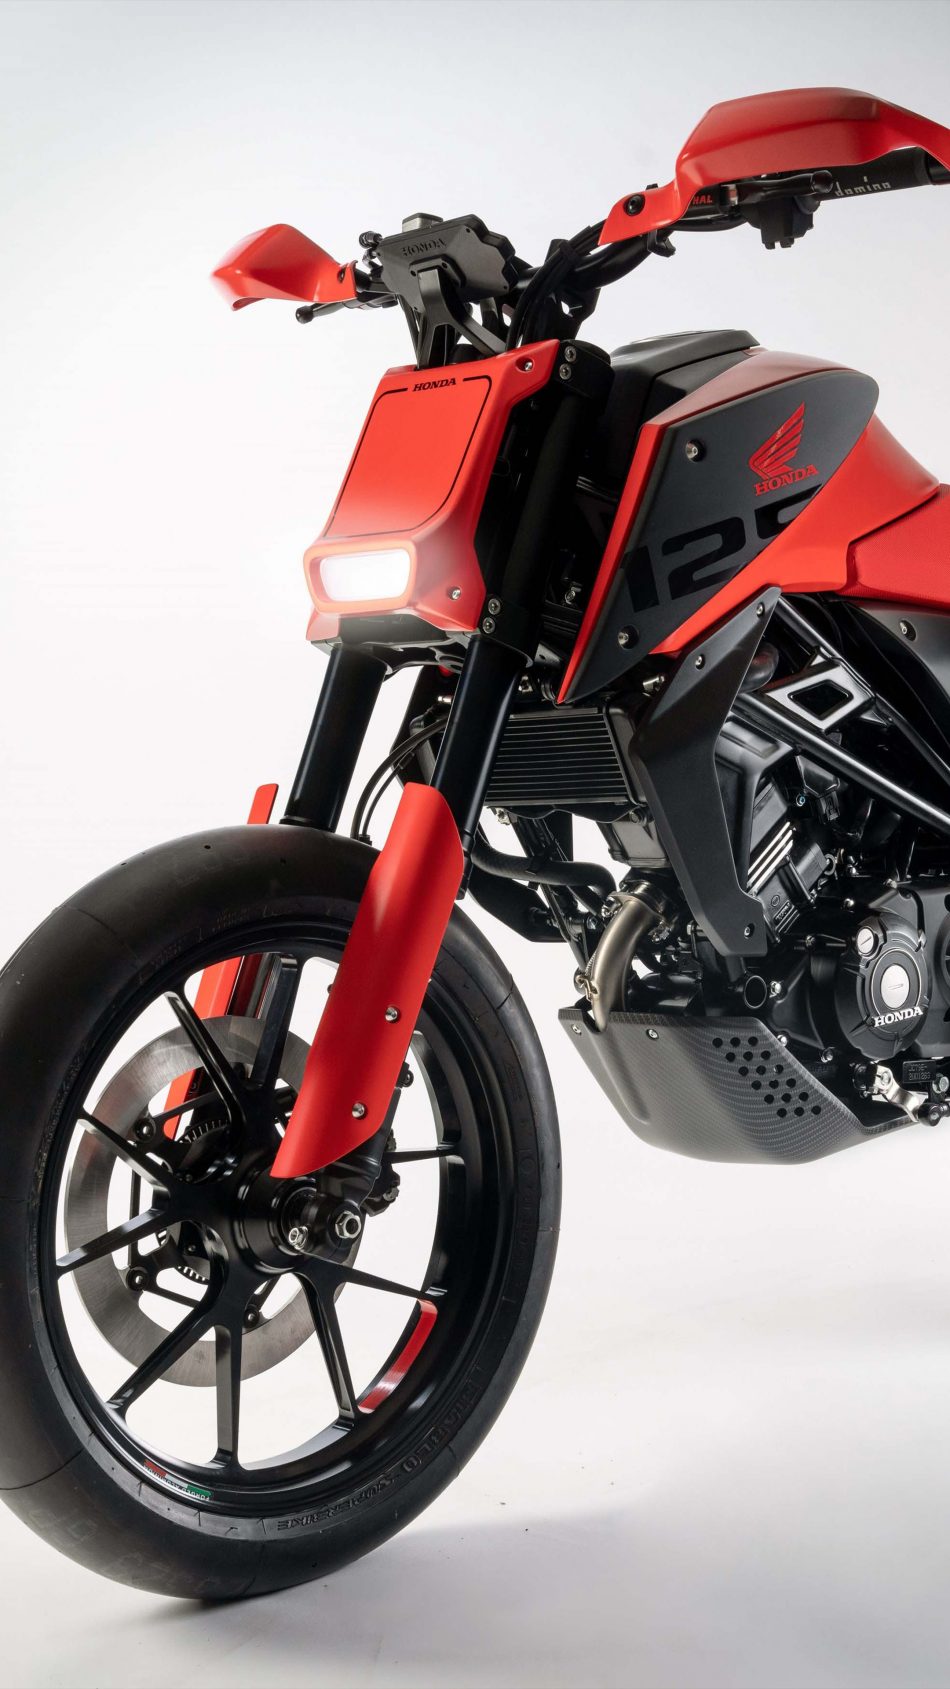 Honda CB125M Concept Bike 4K Ultra HD Mobile Wallpaper